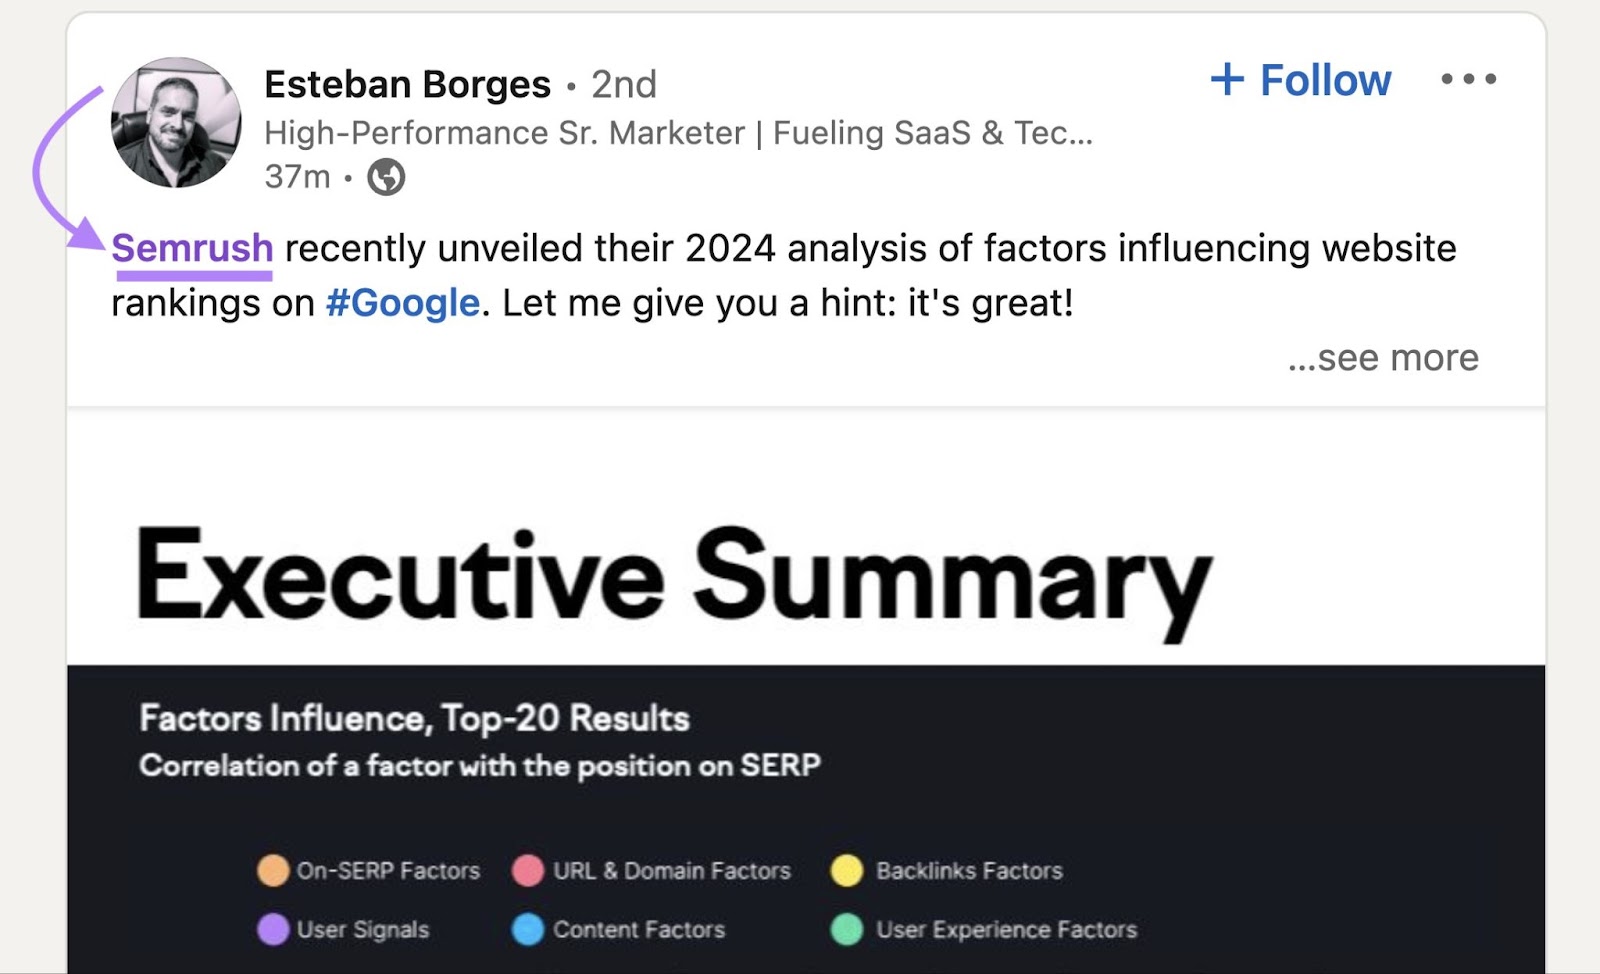 A mention of "Semrush" in Esteban Borges's LinkedIn post